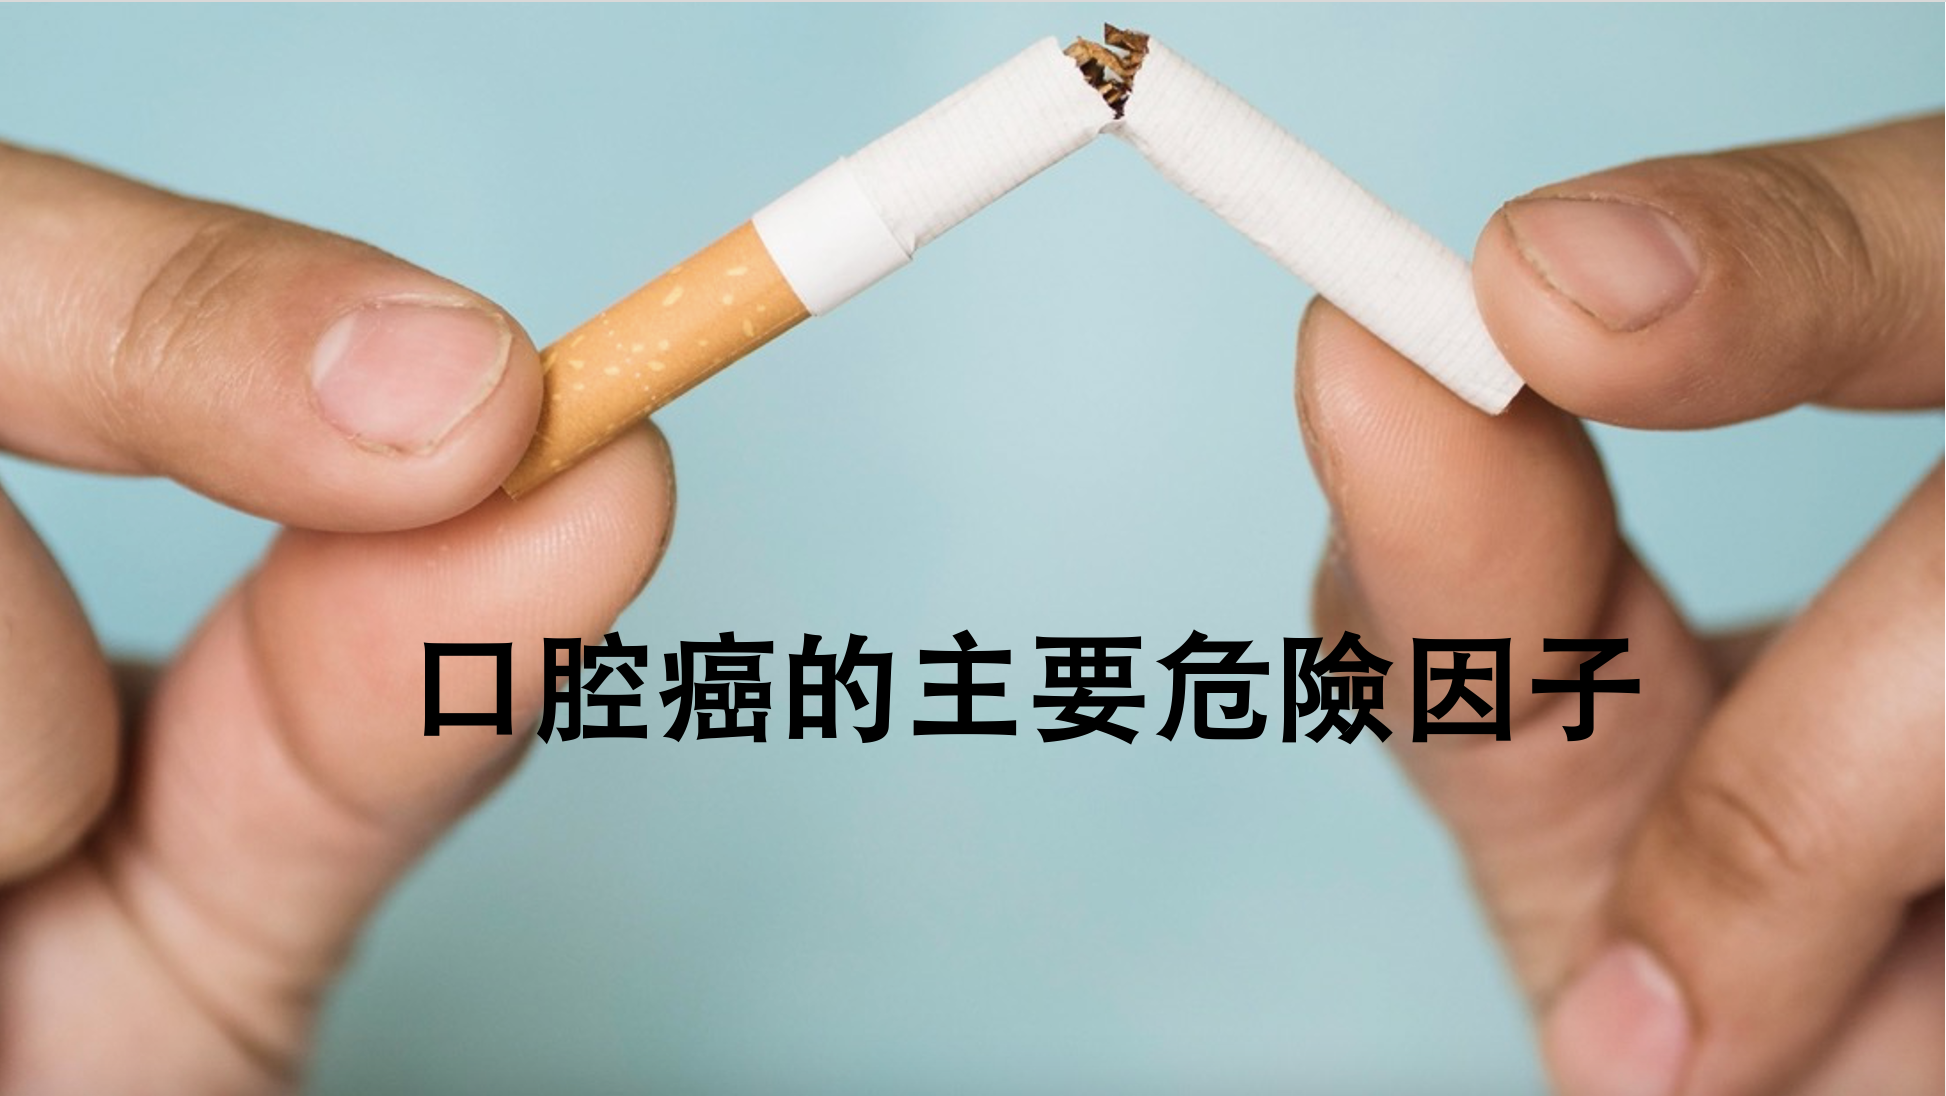 Merokok Meningkatkan Risiko Periodontitis dan Kanker Mulut, Jagalah Kesehatan Mulut dengan Berhenti Merokok 